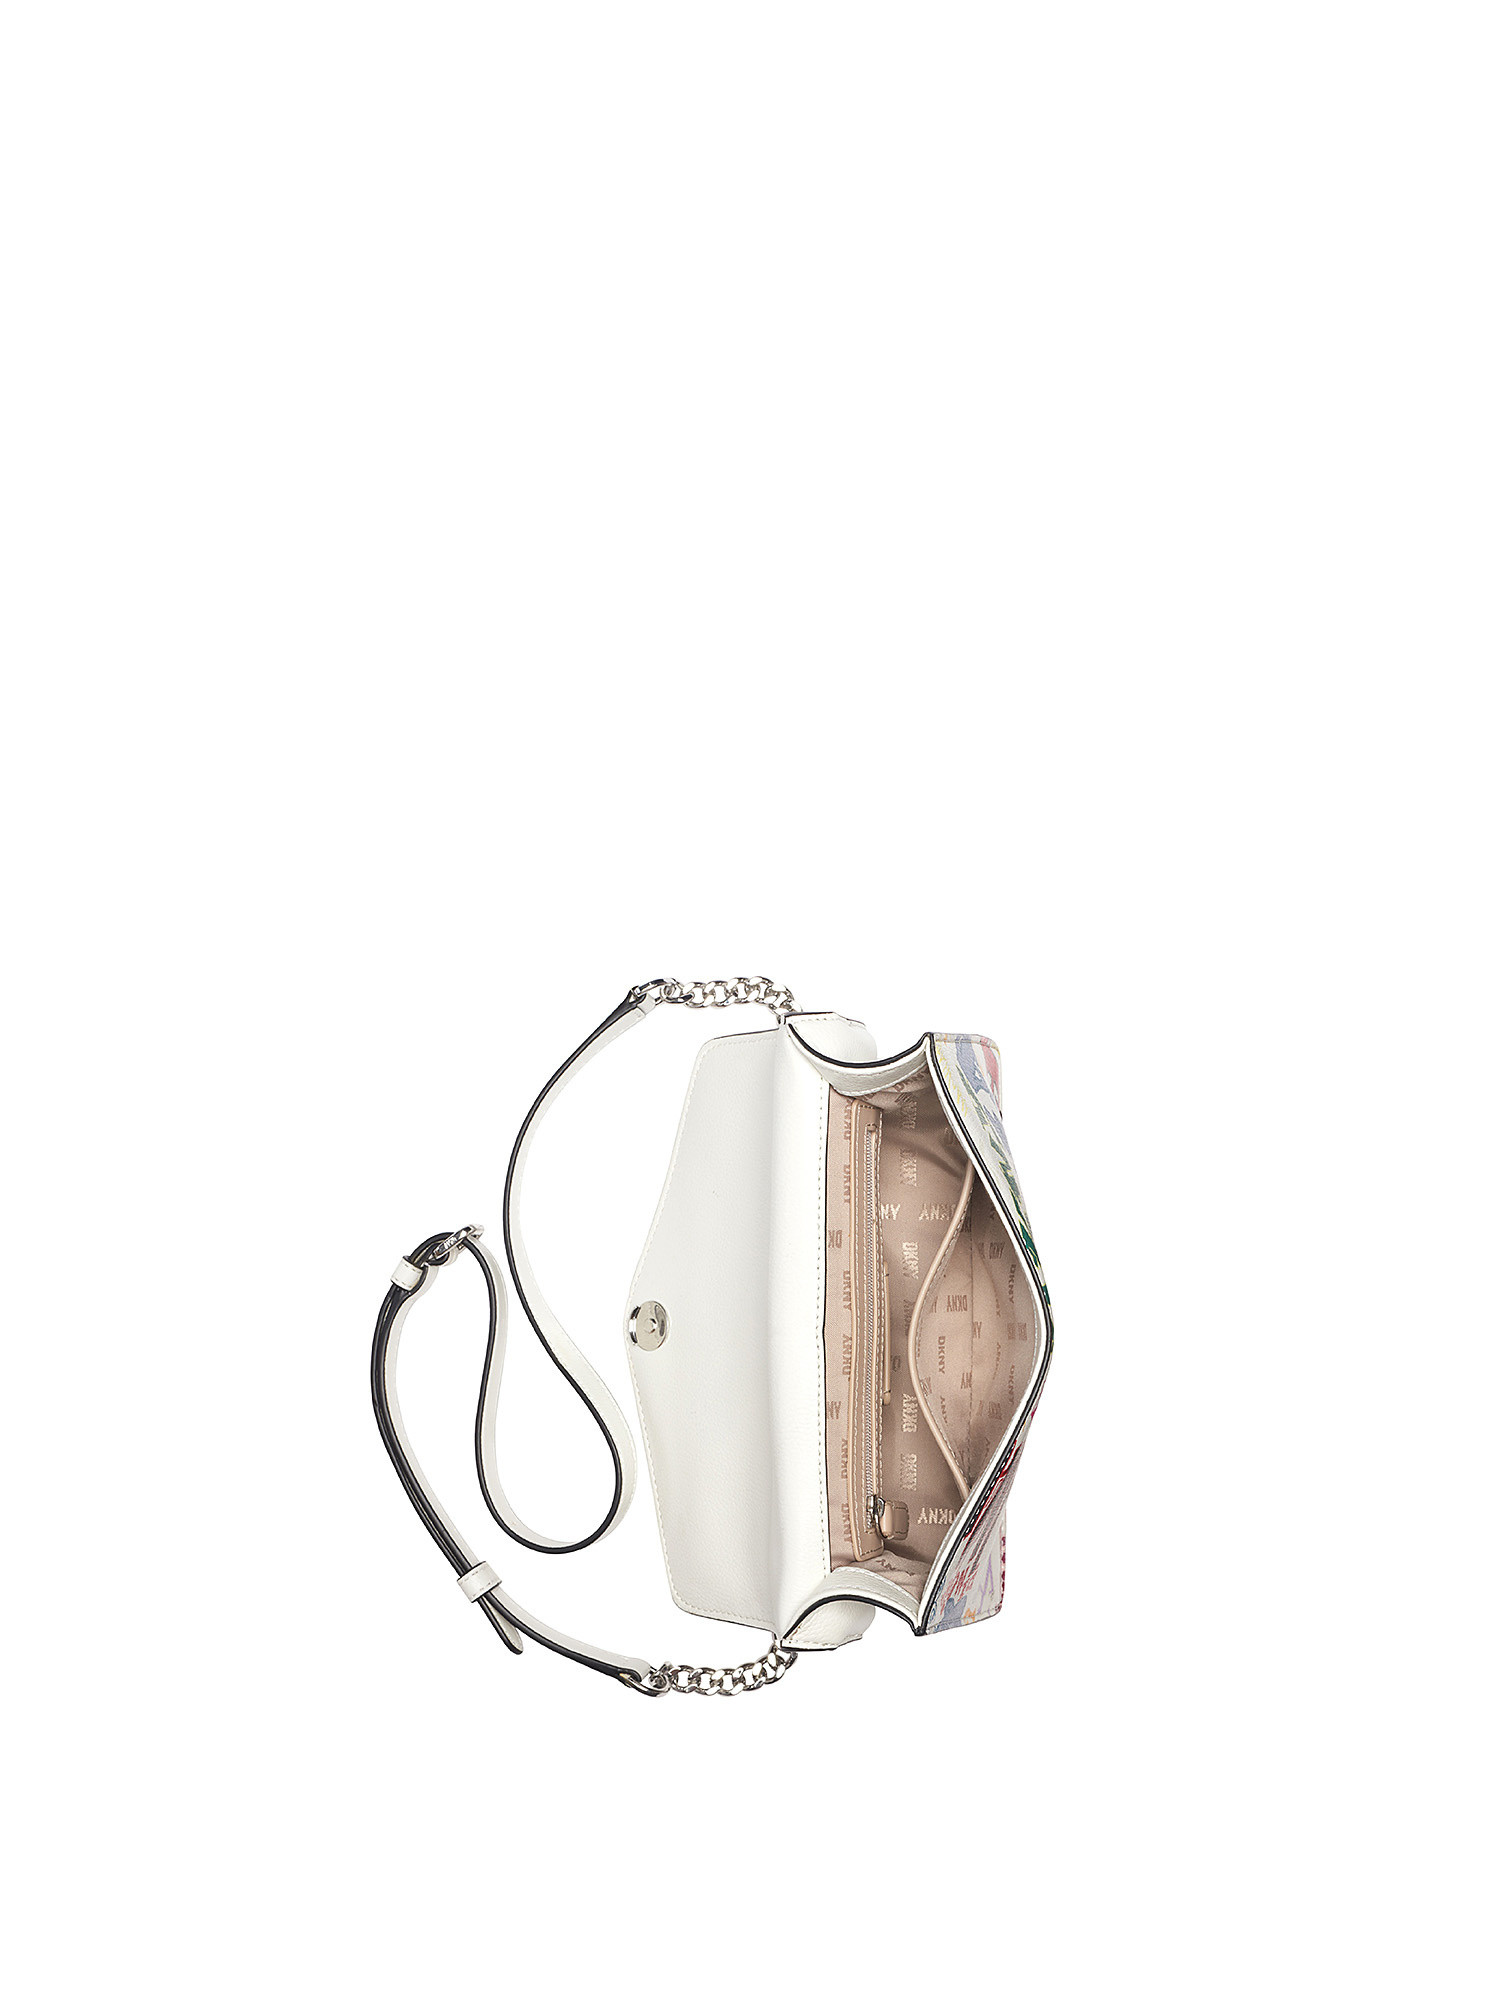 Dkny - Elissa shoulder bag with graffiti print, White, large image number 3